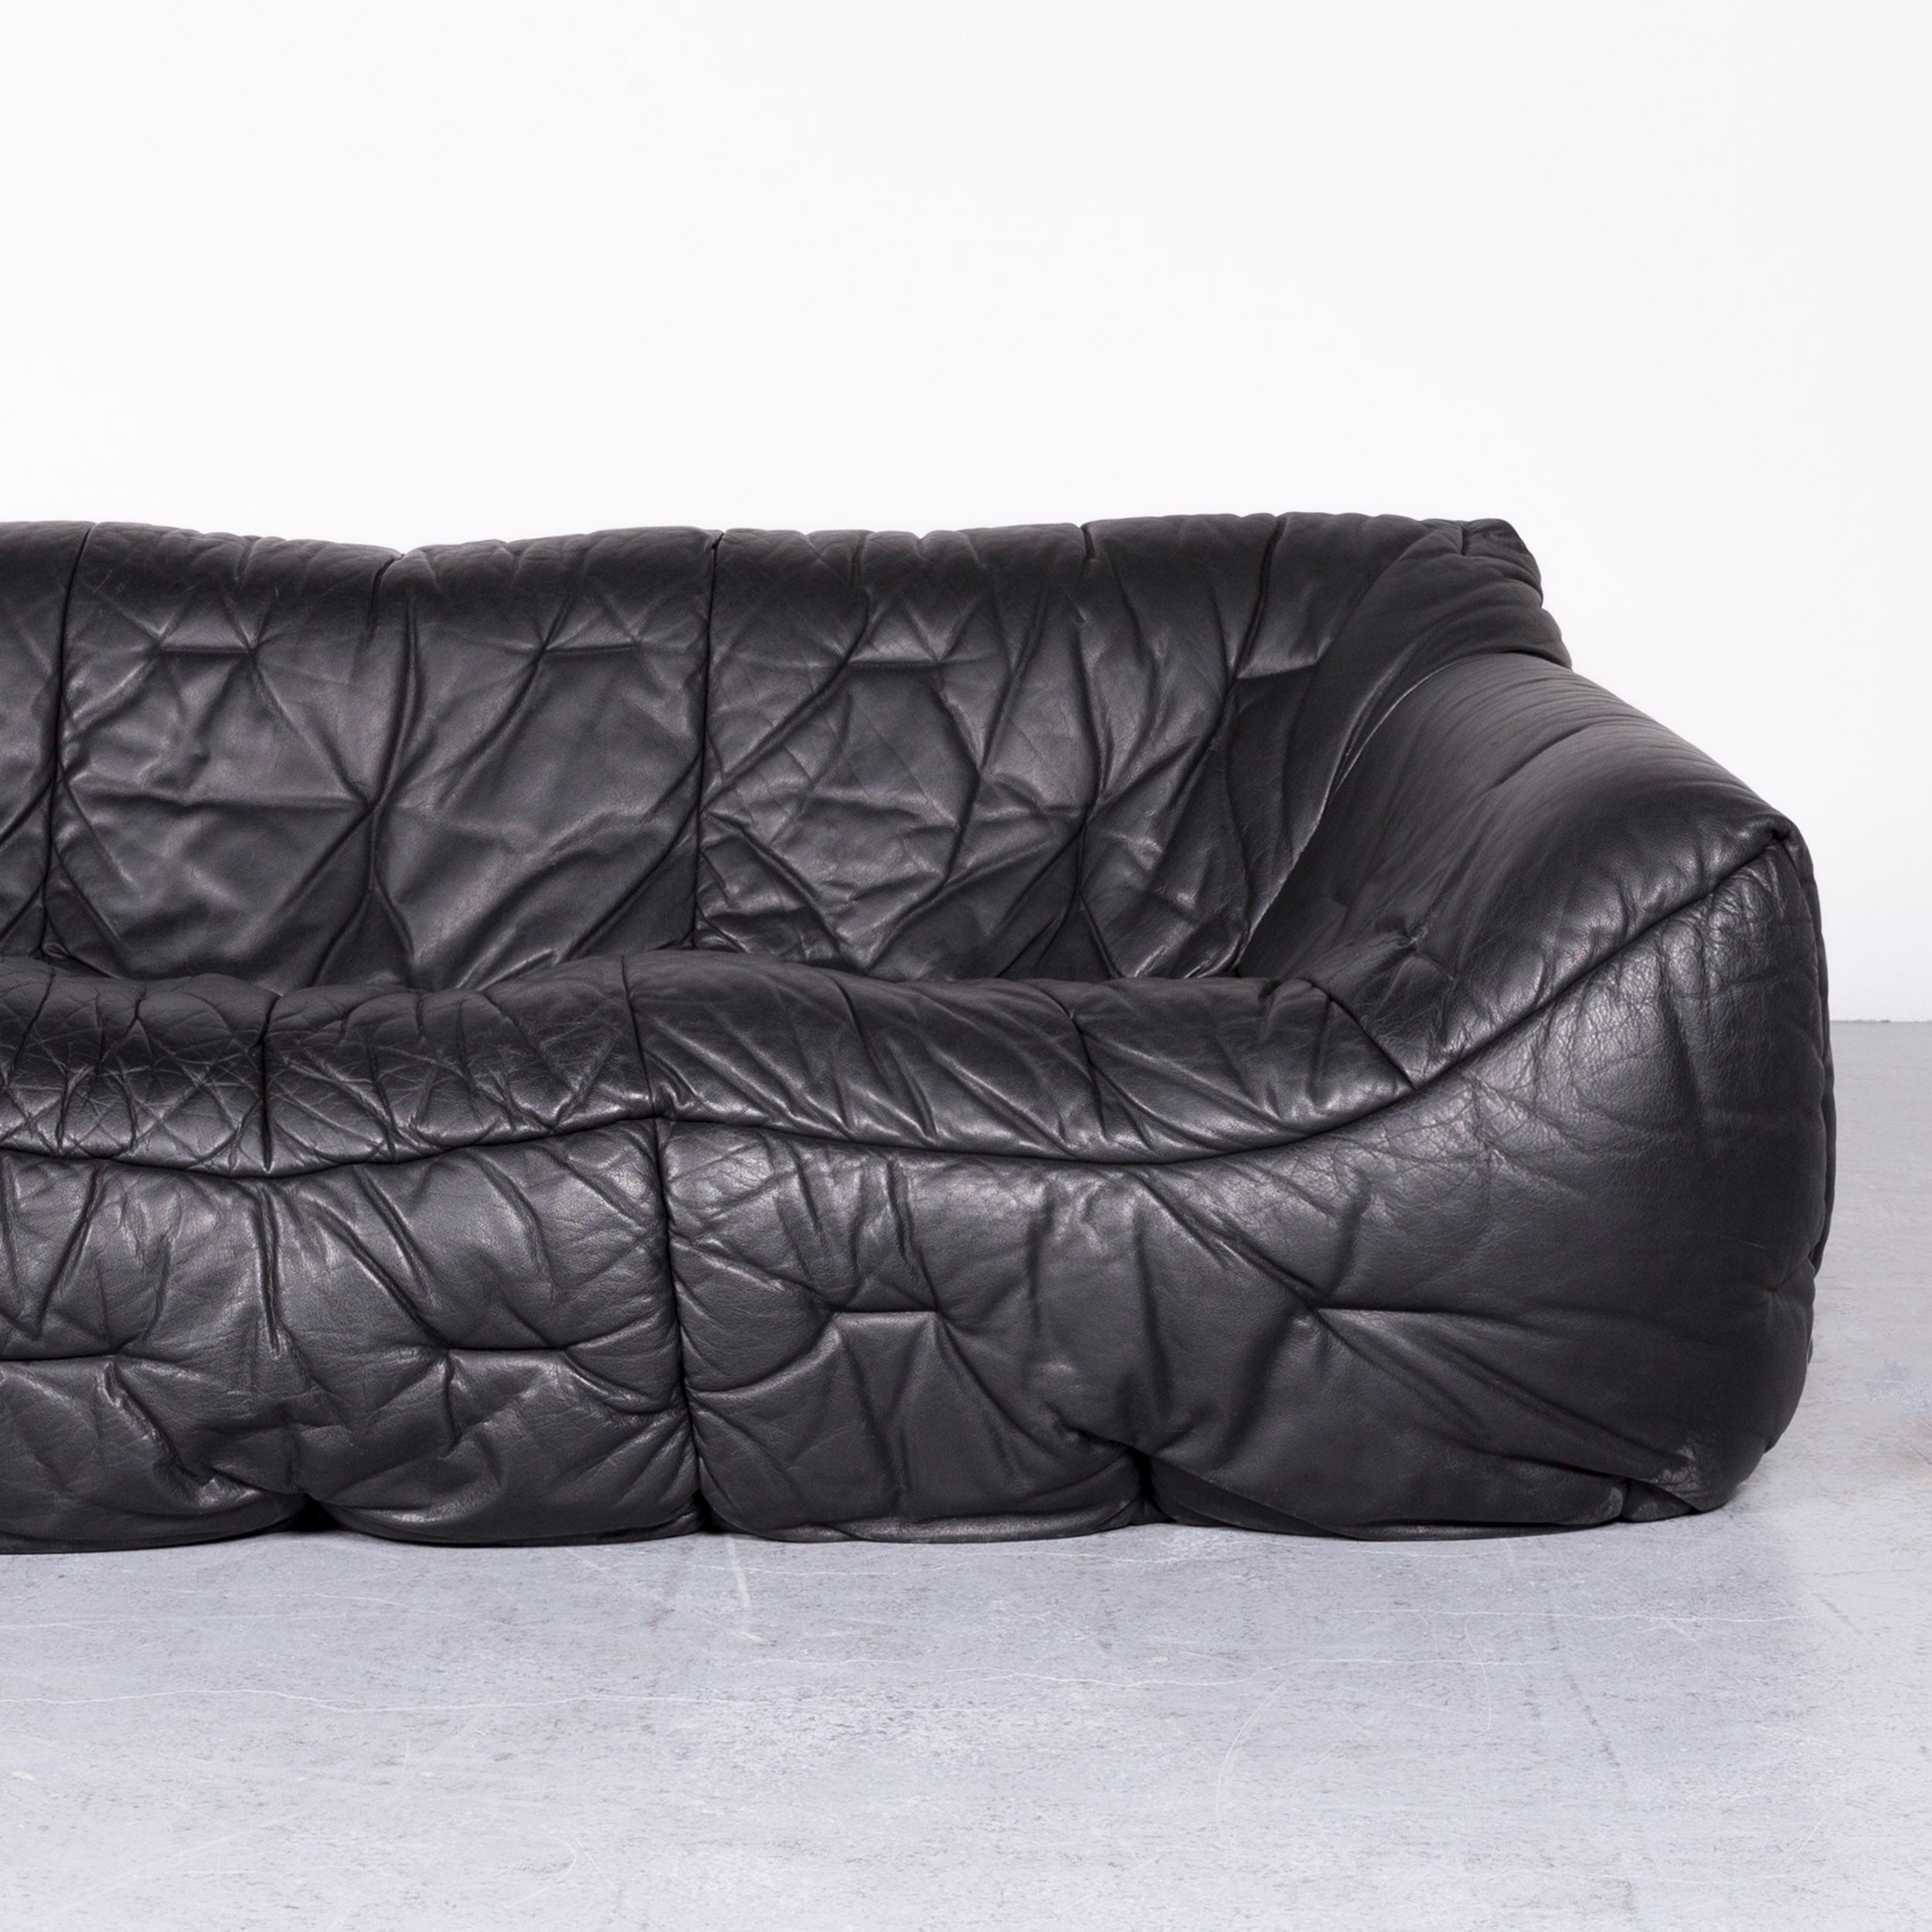 French Roche Bobois Informel Designer Leather Sofa Black Three-Seat Couch